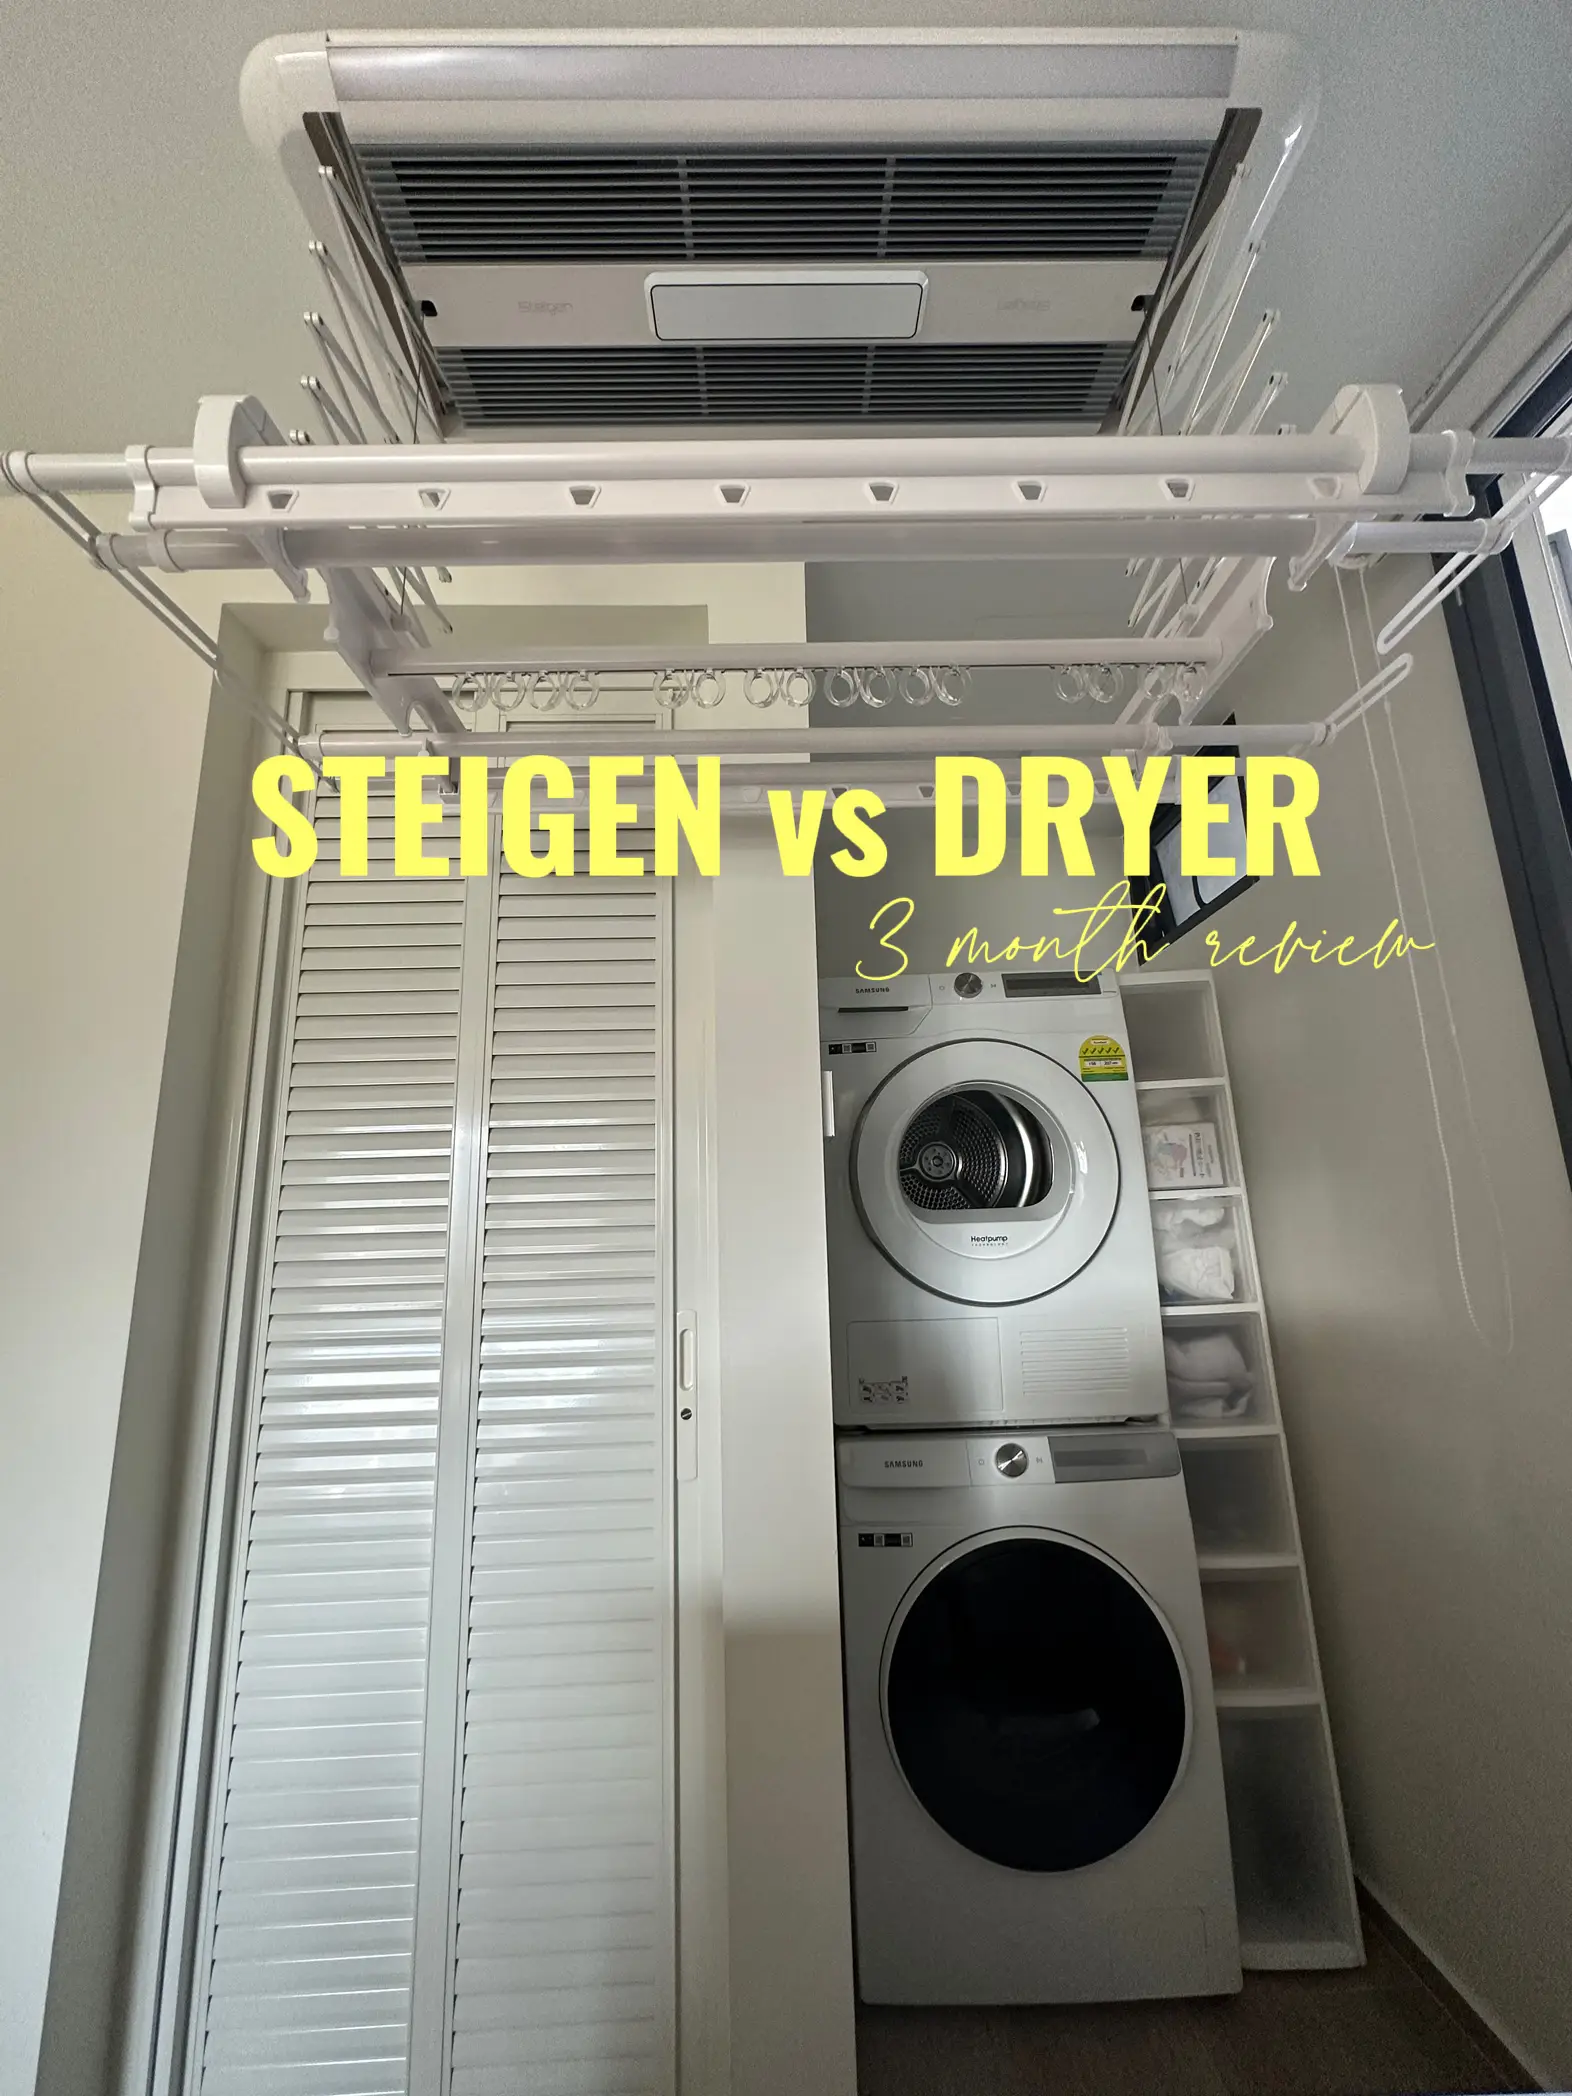 We tried both dryer & Steigen for 3 months's images